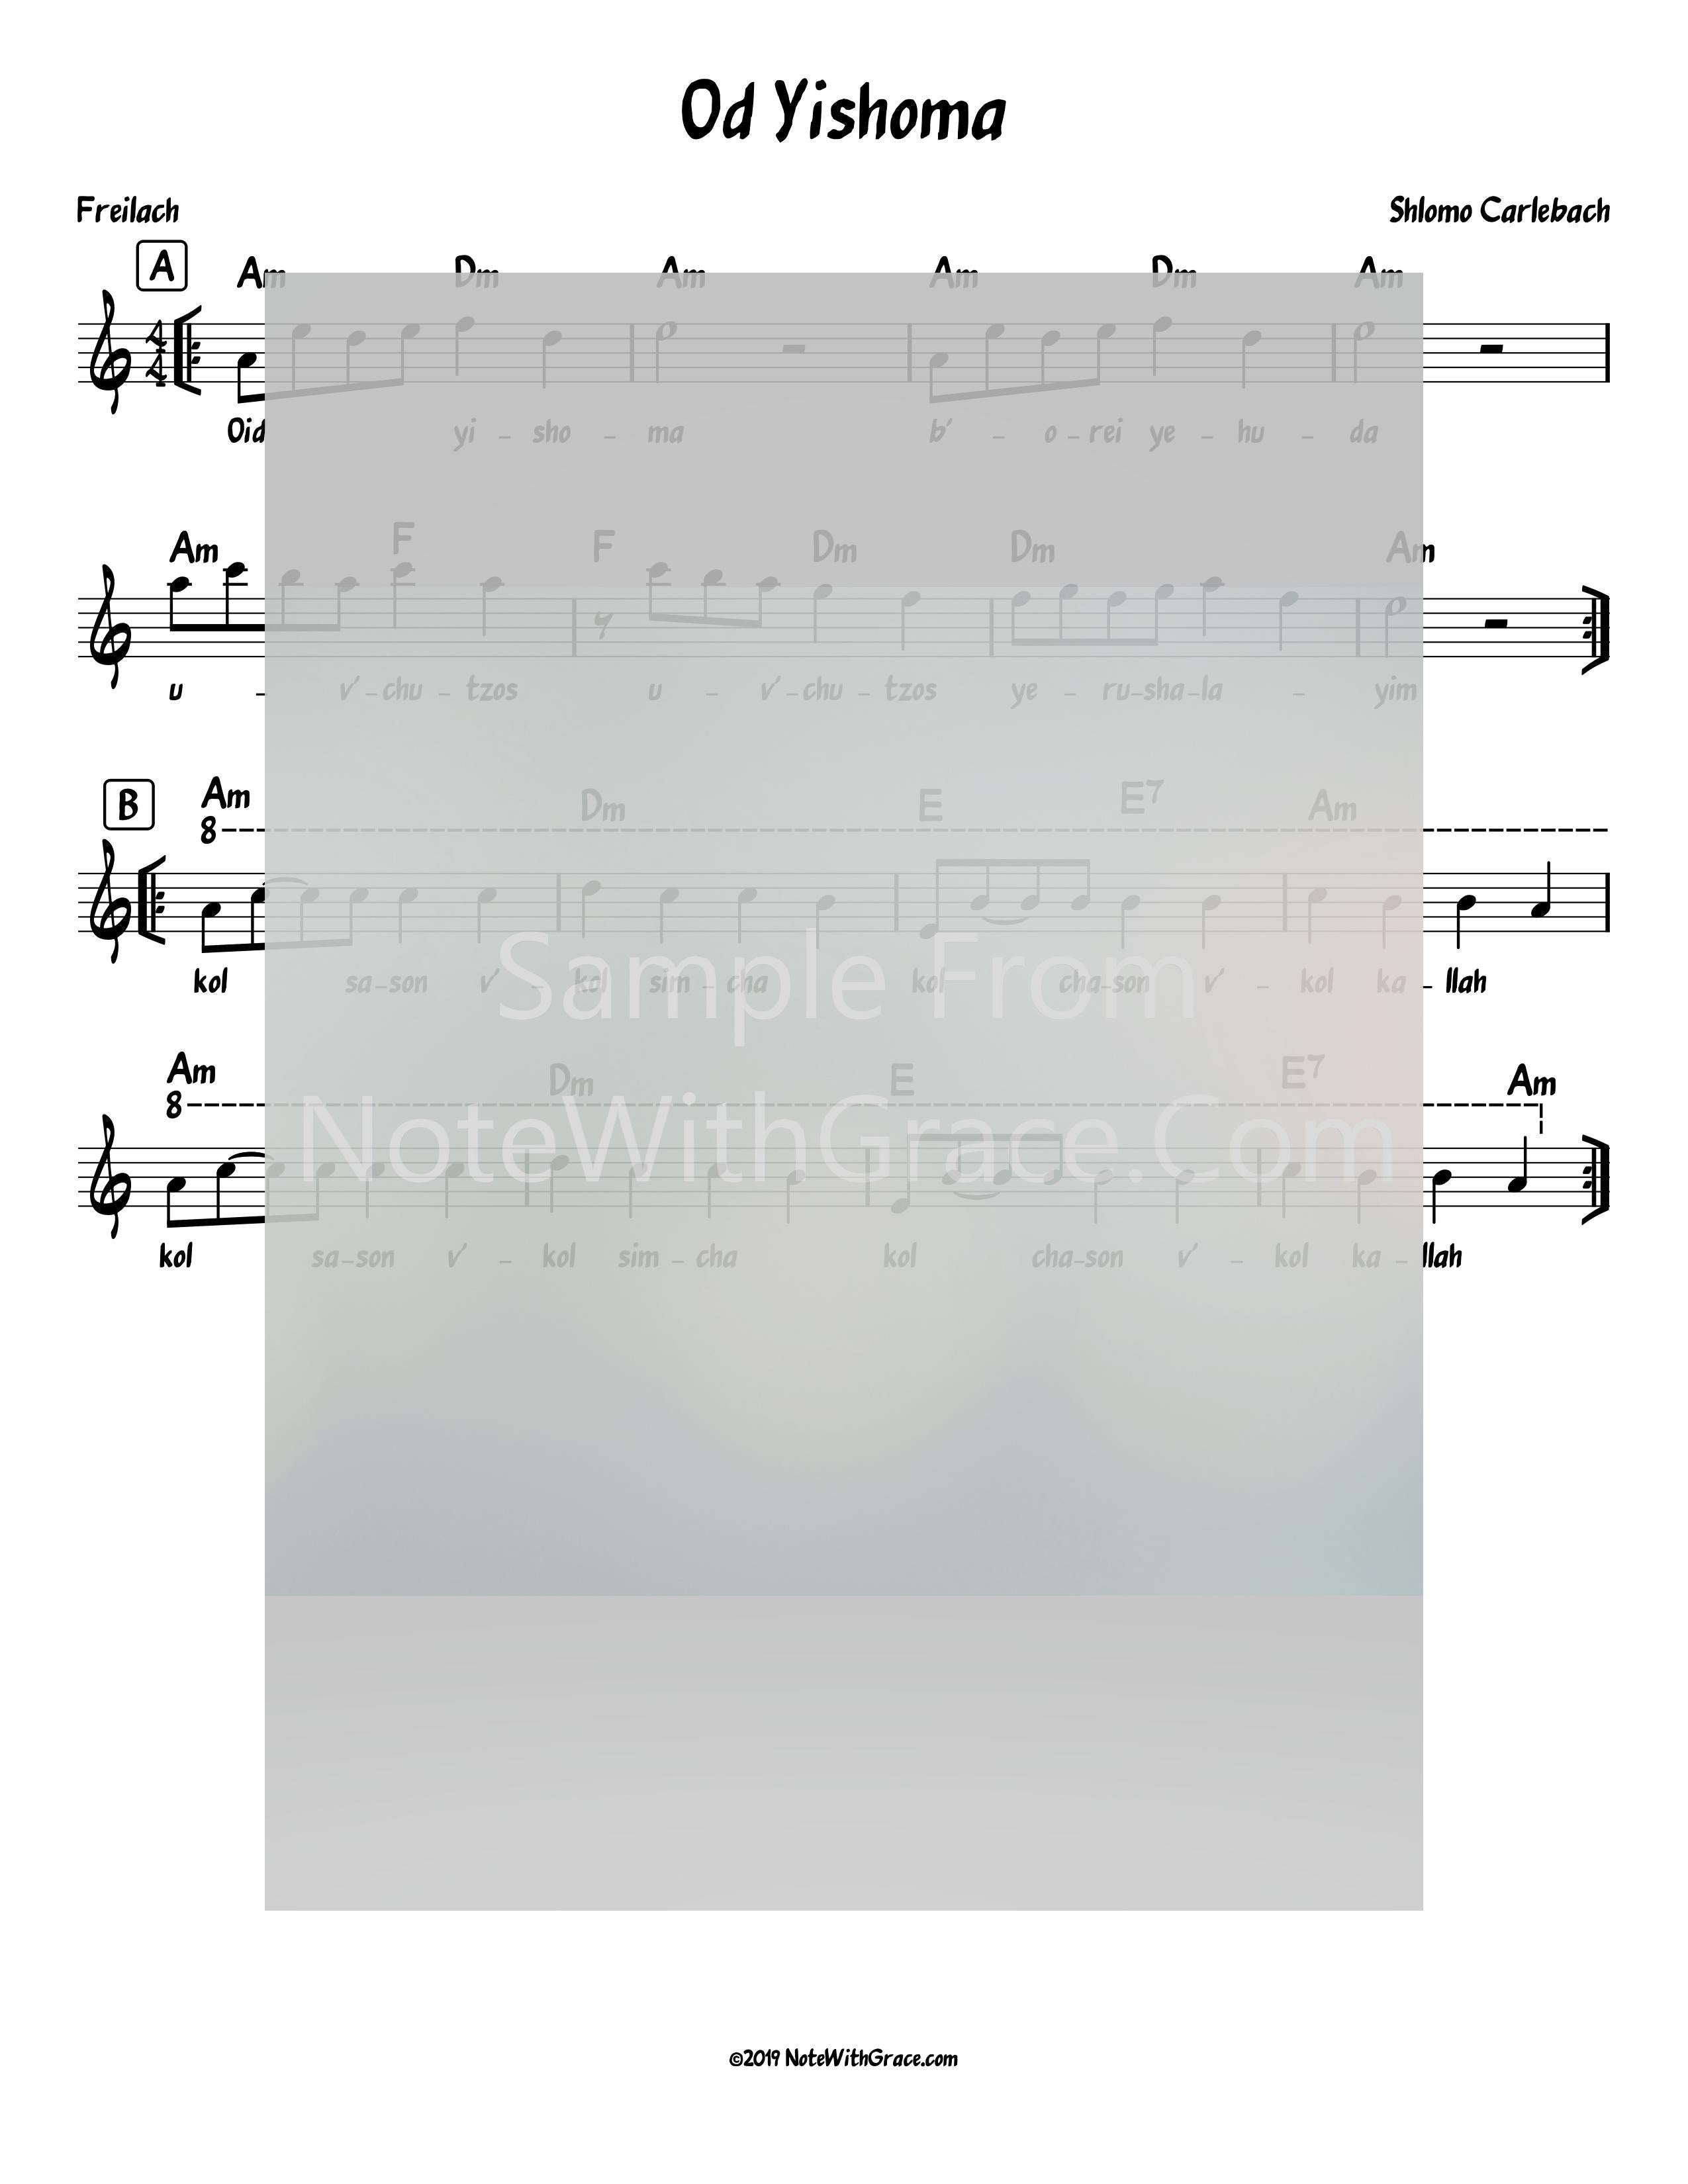 Oid Yishoma Lead Sheet (Shlomo Carlbach)-Sheet music-NoteWithGrace.com